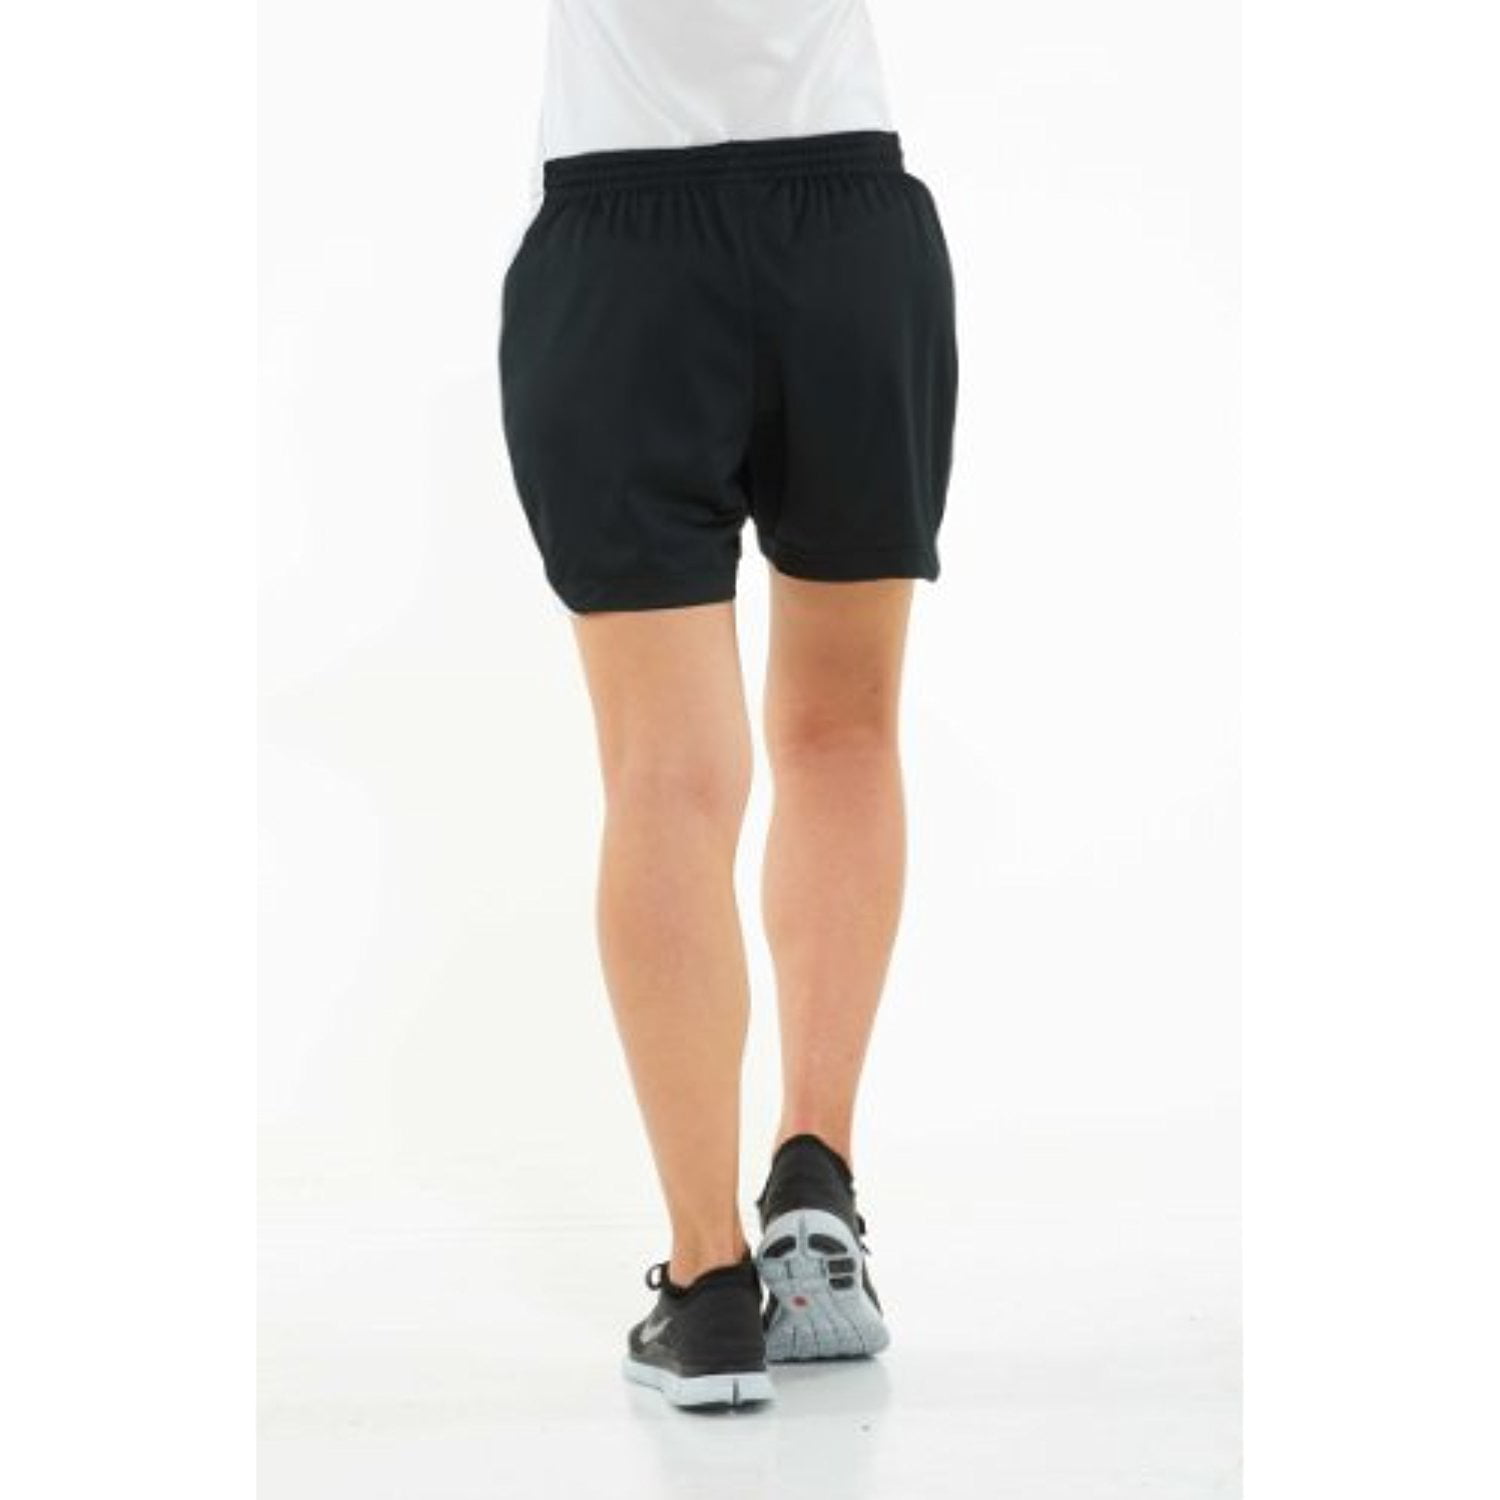 Janice madera Brillante Nike Womens Flex Trainer 7 Low Top Lace Up, Black/Metallic Silver, Size 7.5  - Walmart.com